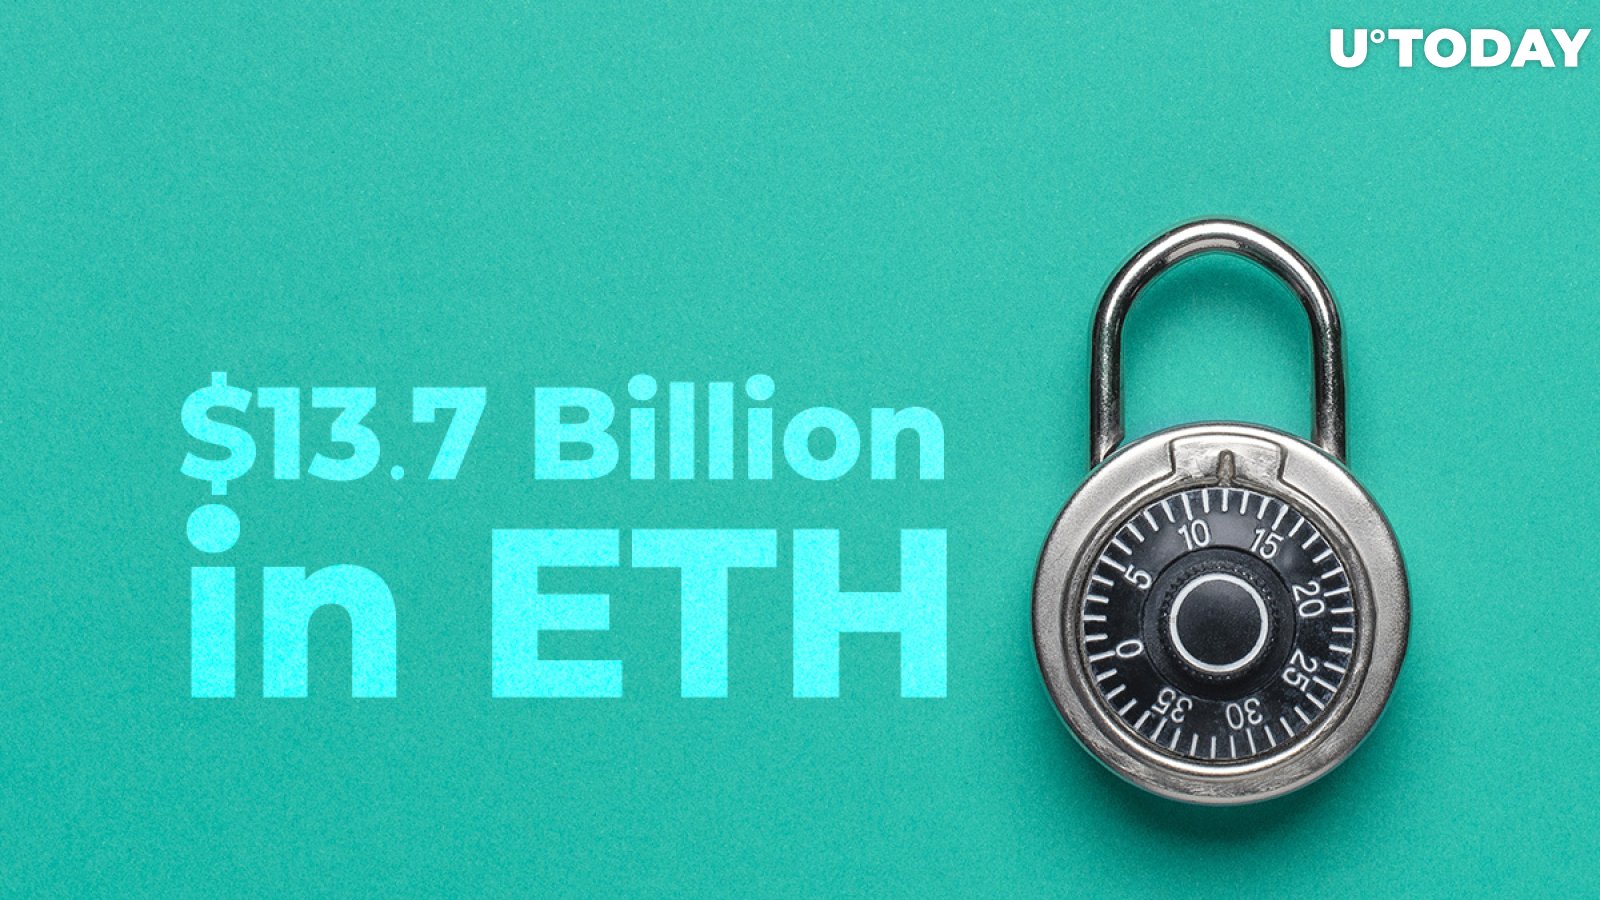 $13.7 Billion in ETH Locked in Ethereum 2.0 Deposit Contact As London Hard Fork Draws Closer